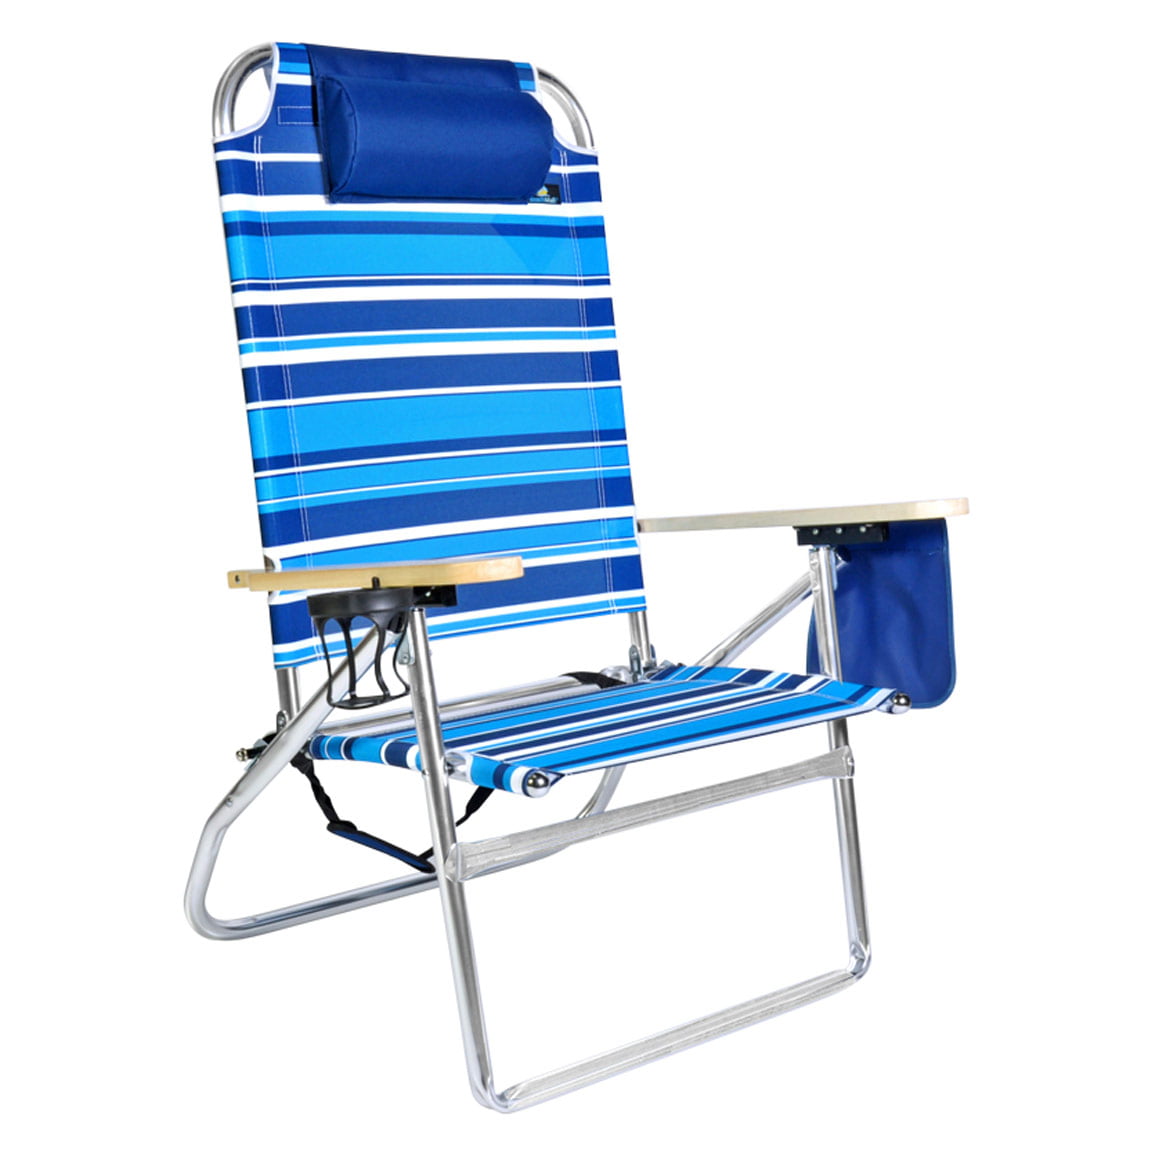  3 Position Beach Chair for Simple Design